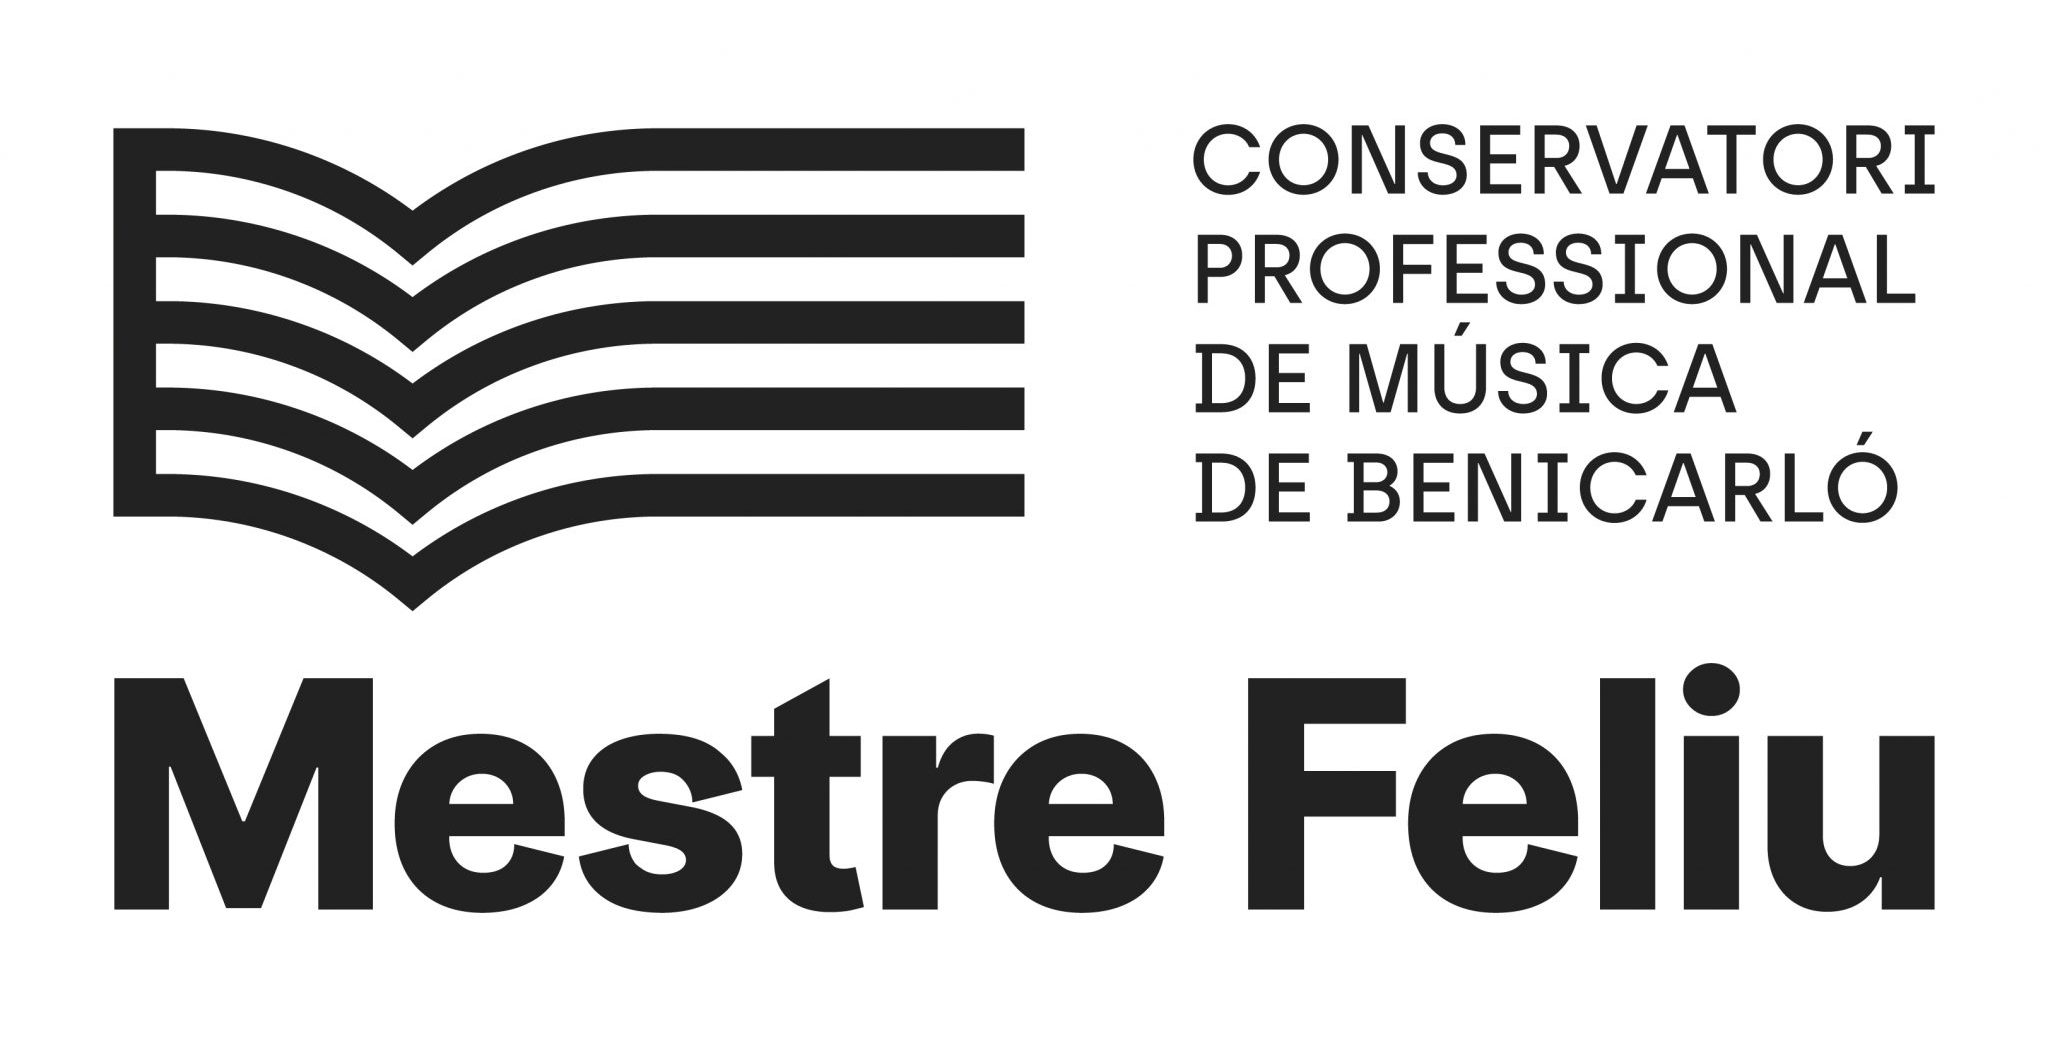 Conservatori Professional de Música Mestre Feliu de Benicarló